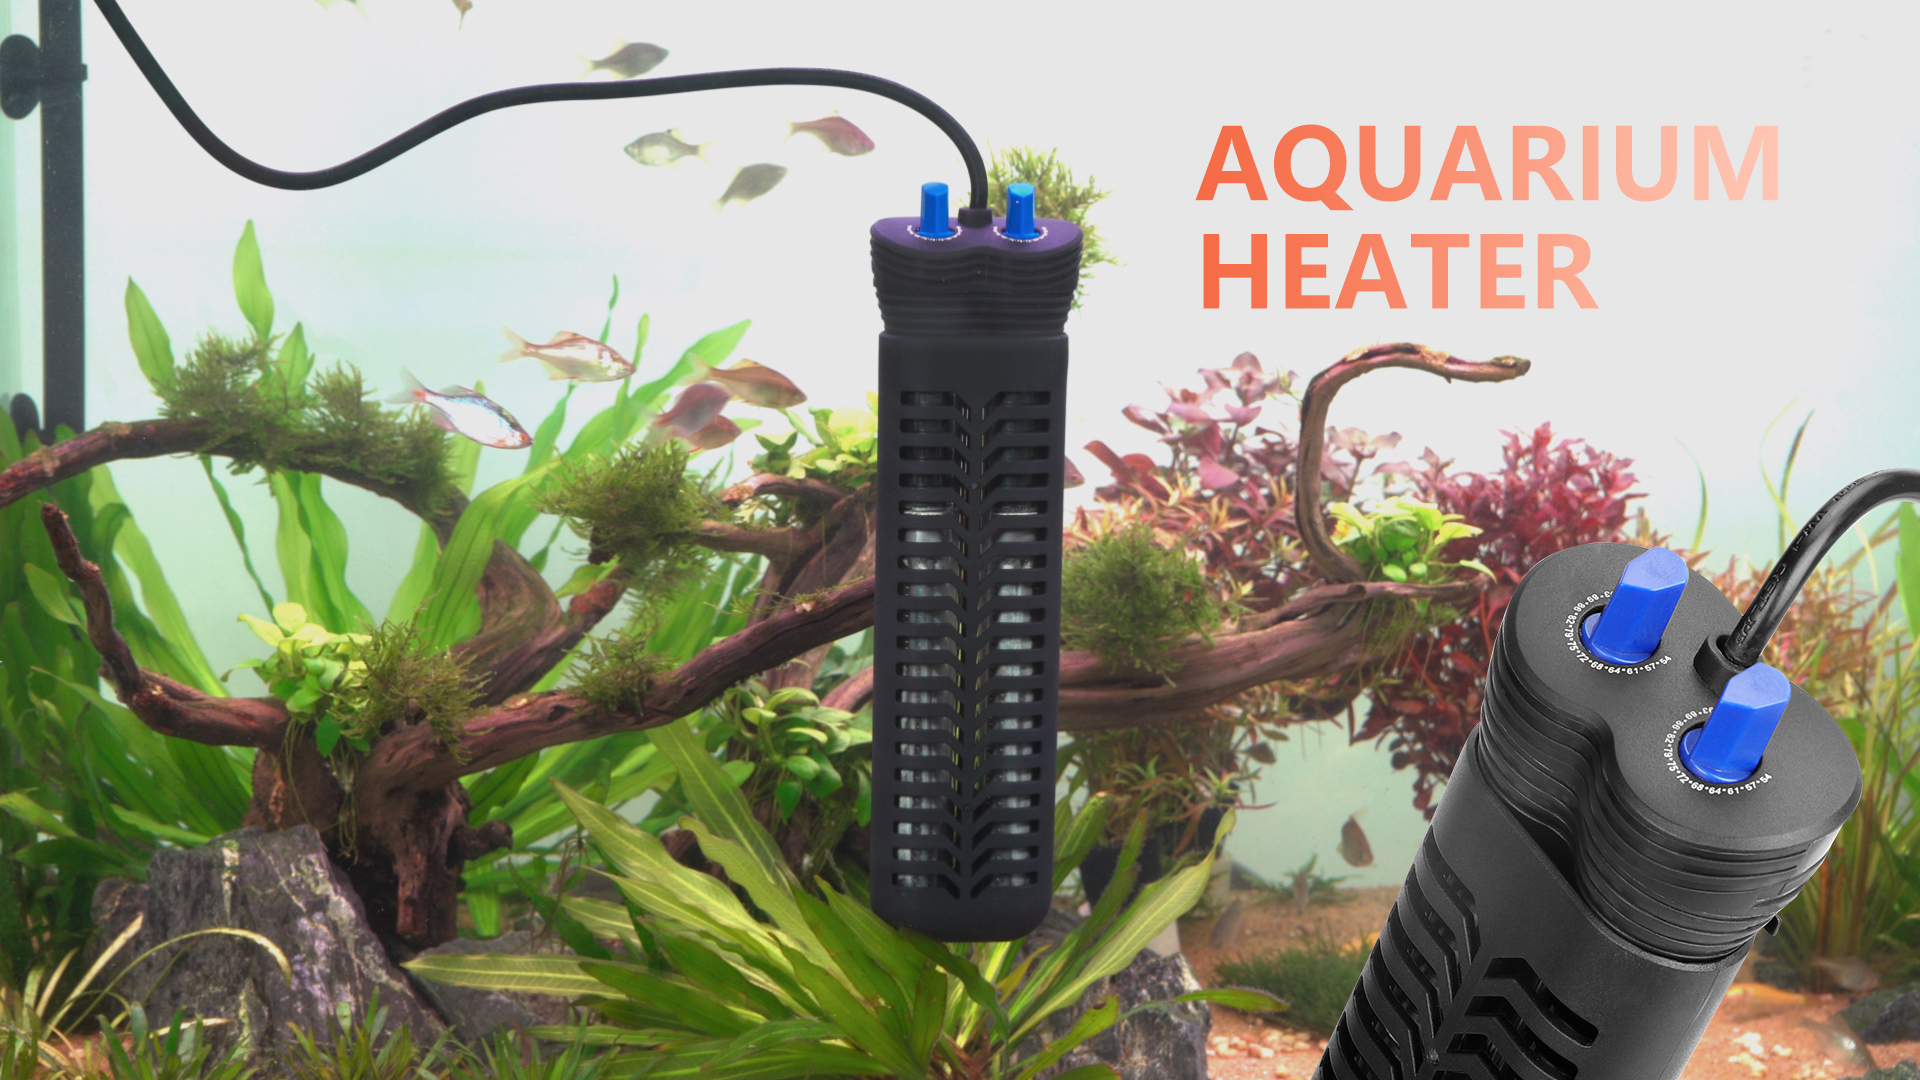 fishkeeper 600W 800W Aquarium Heater for 60-220 Gallon, Double Tube Adjustable Fish Tank Heater